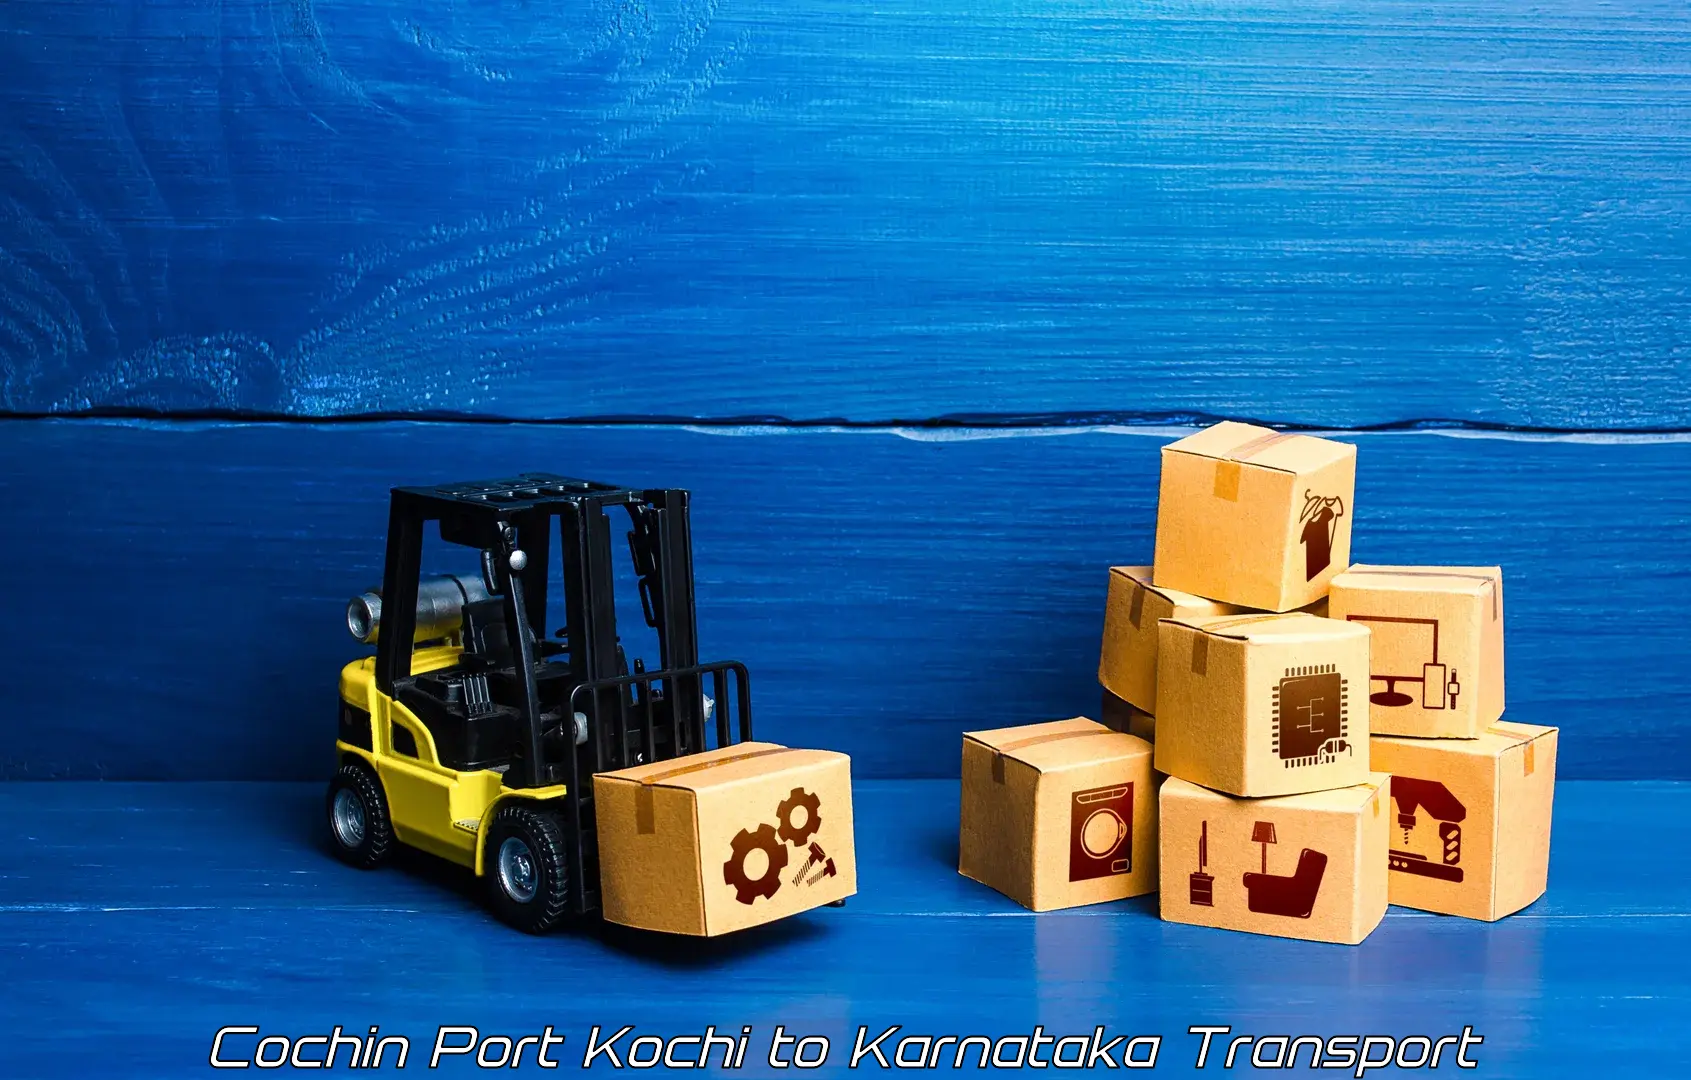 Express transport services Cochin Port Kochi to Kurugodu